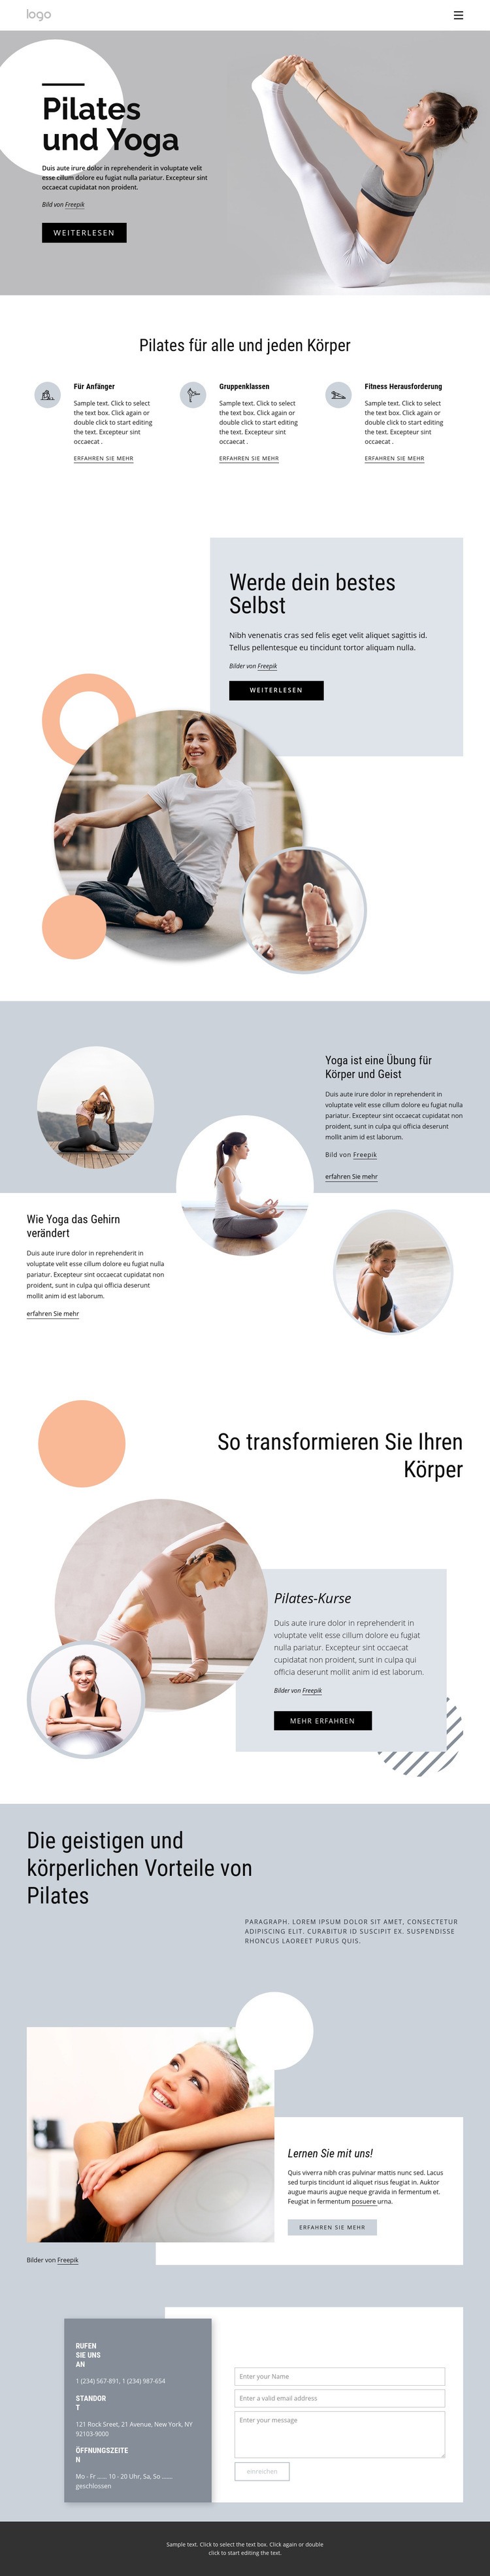 Pilates und Yoga Zentrum Website design